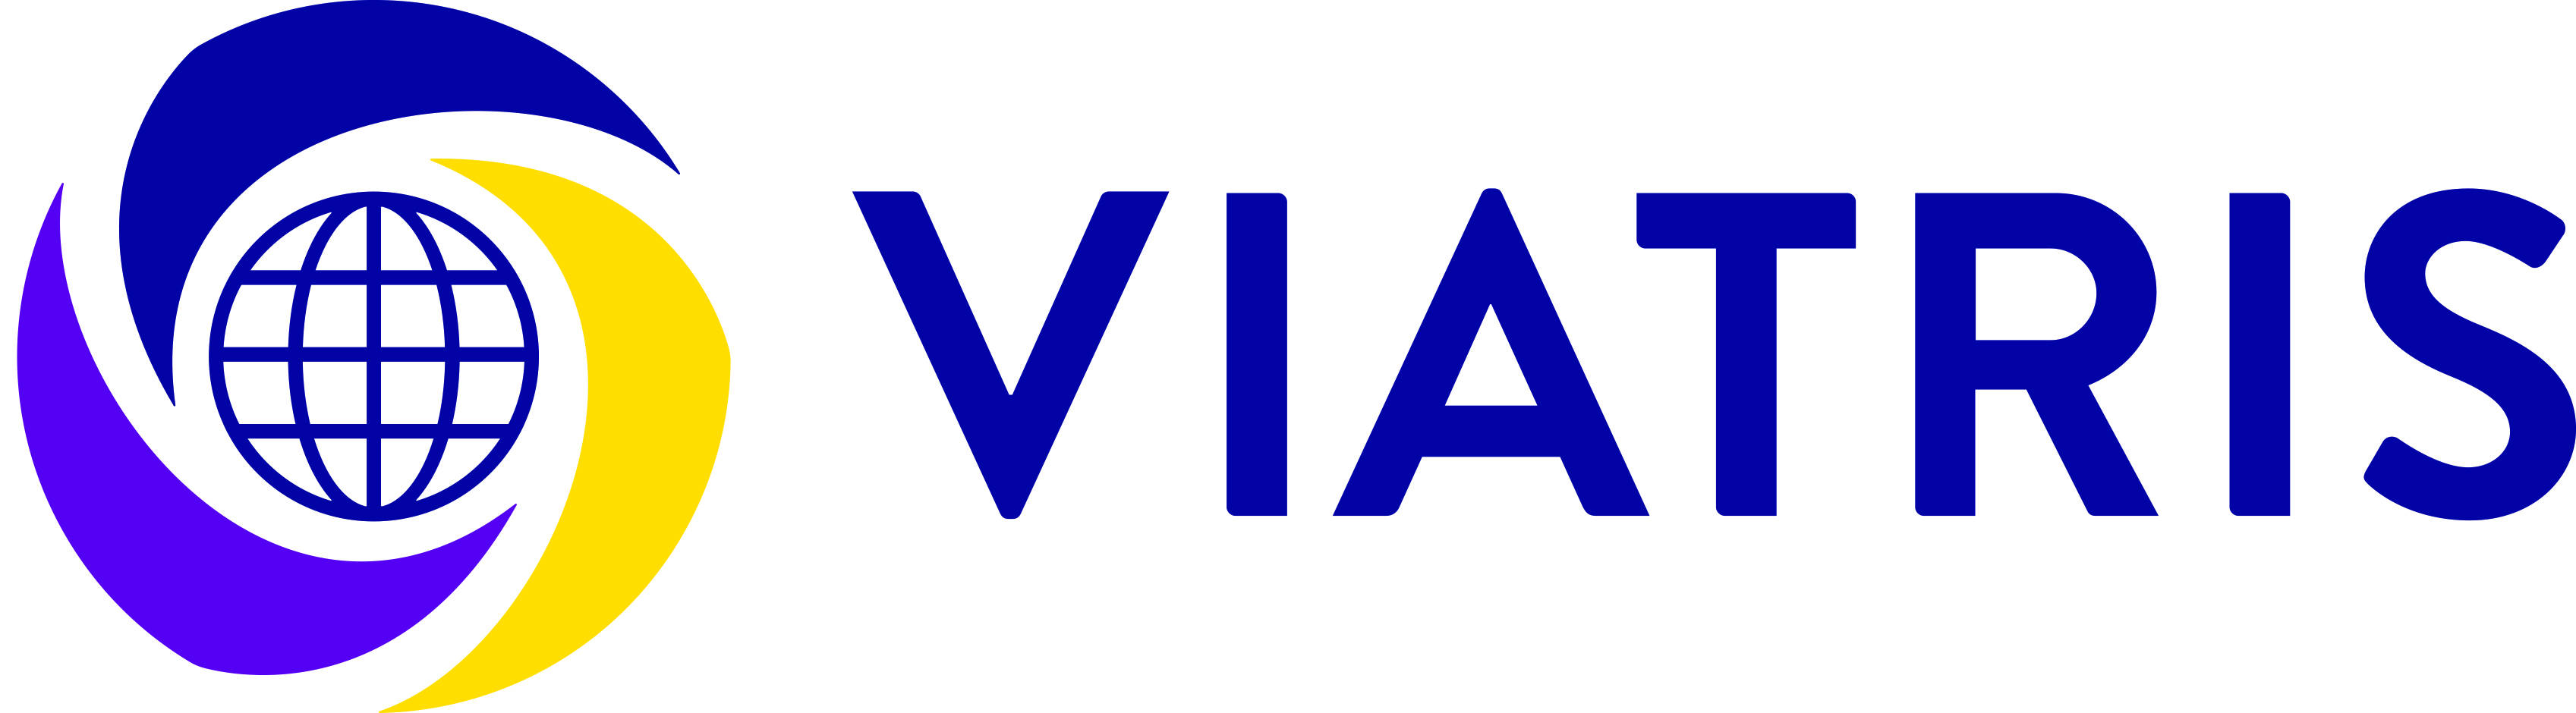 OUS Viatris Logo Horiz CMYK